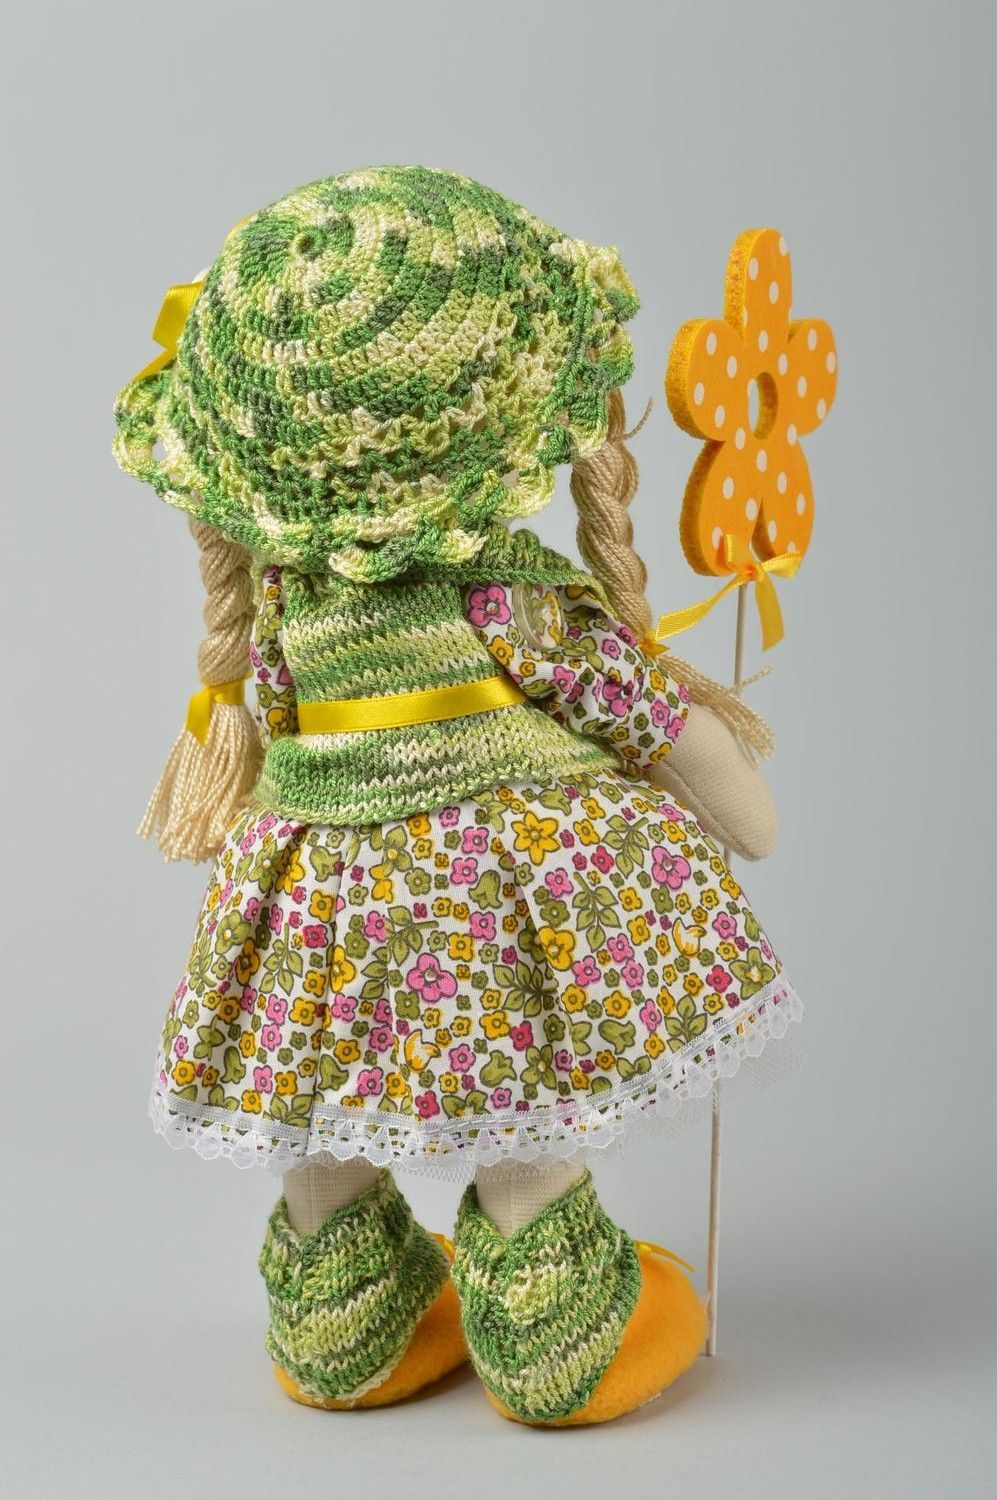 Handmade doll designer doll textile doll fabric doll gift for girl decor ideas photo 5